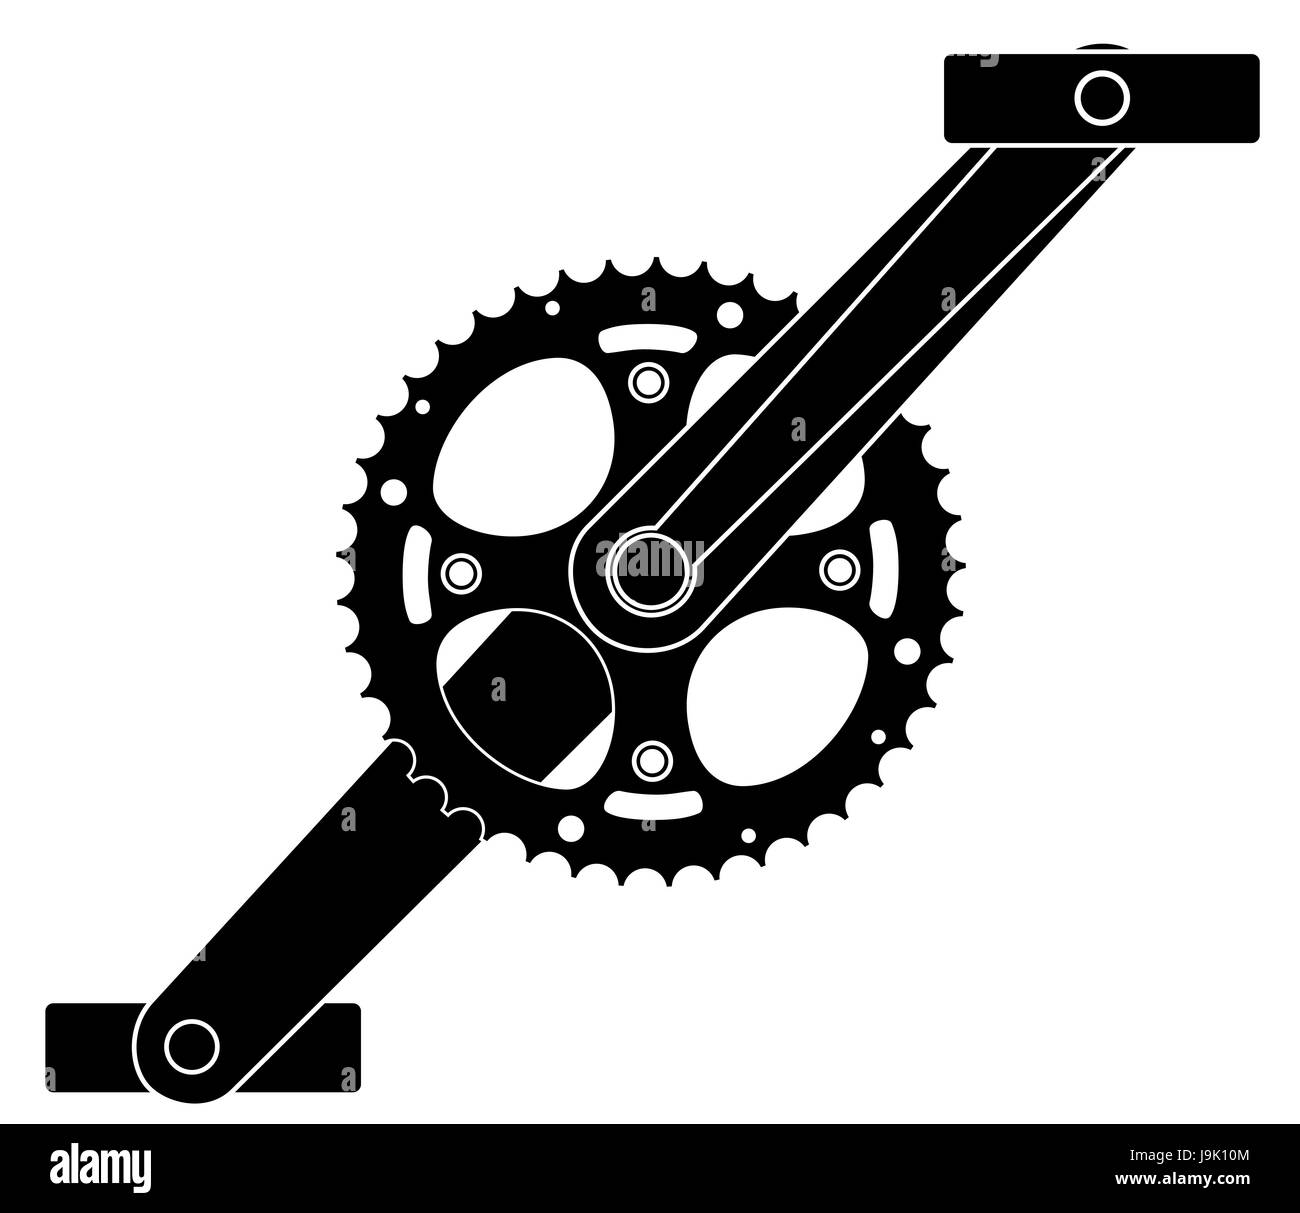 Bicycle gear, metal cogwheel Stock Photo